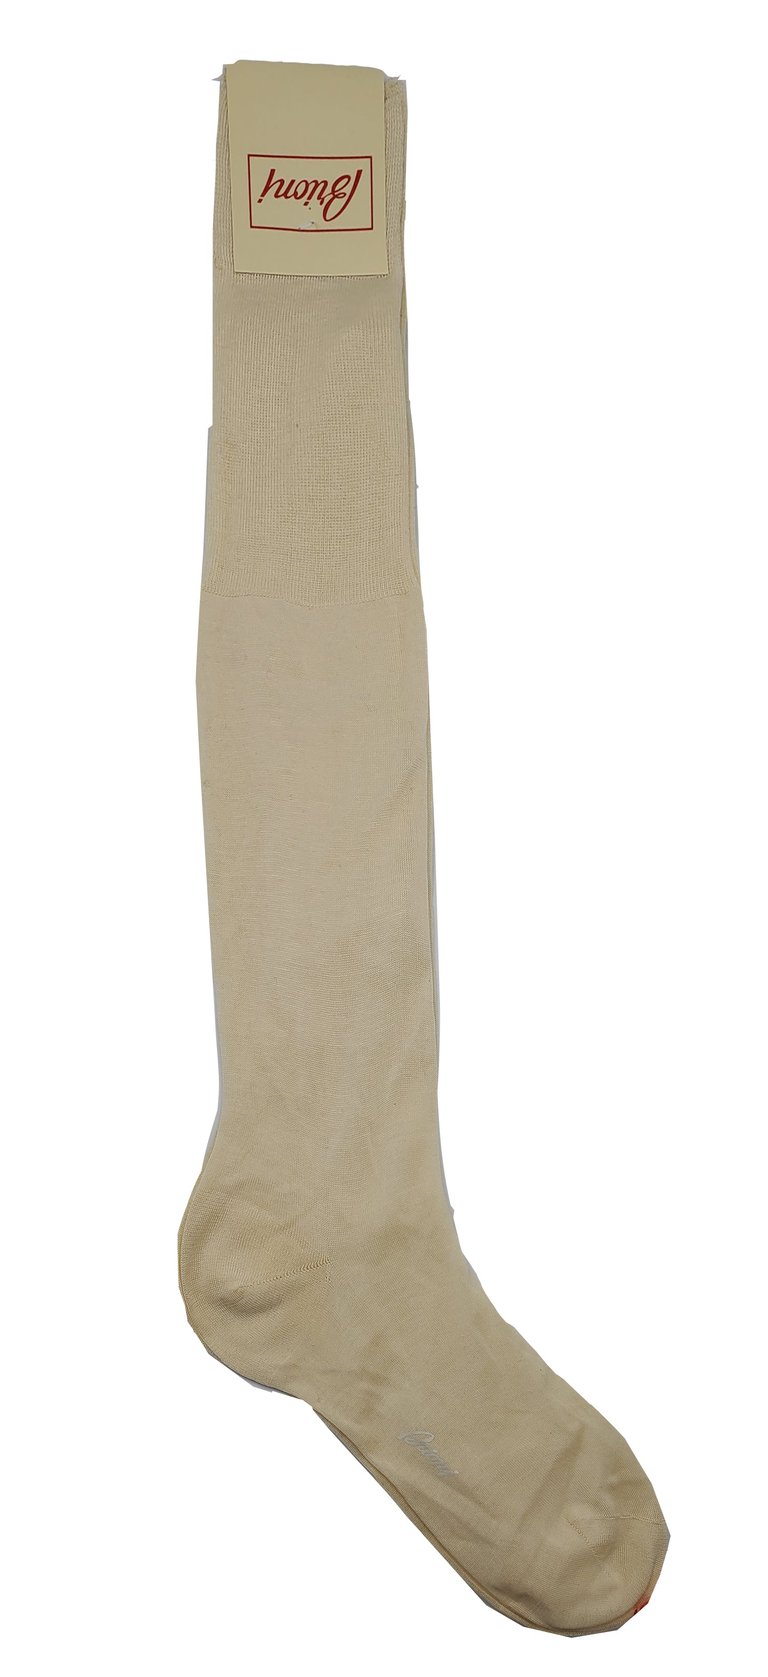 Men's Ivory Long Socks - Beige